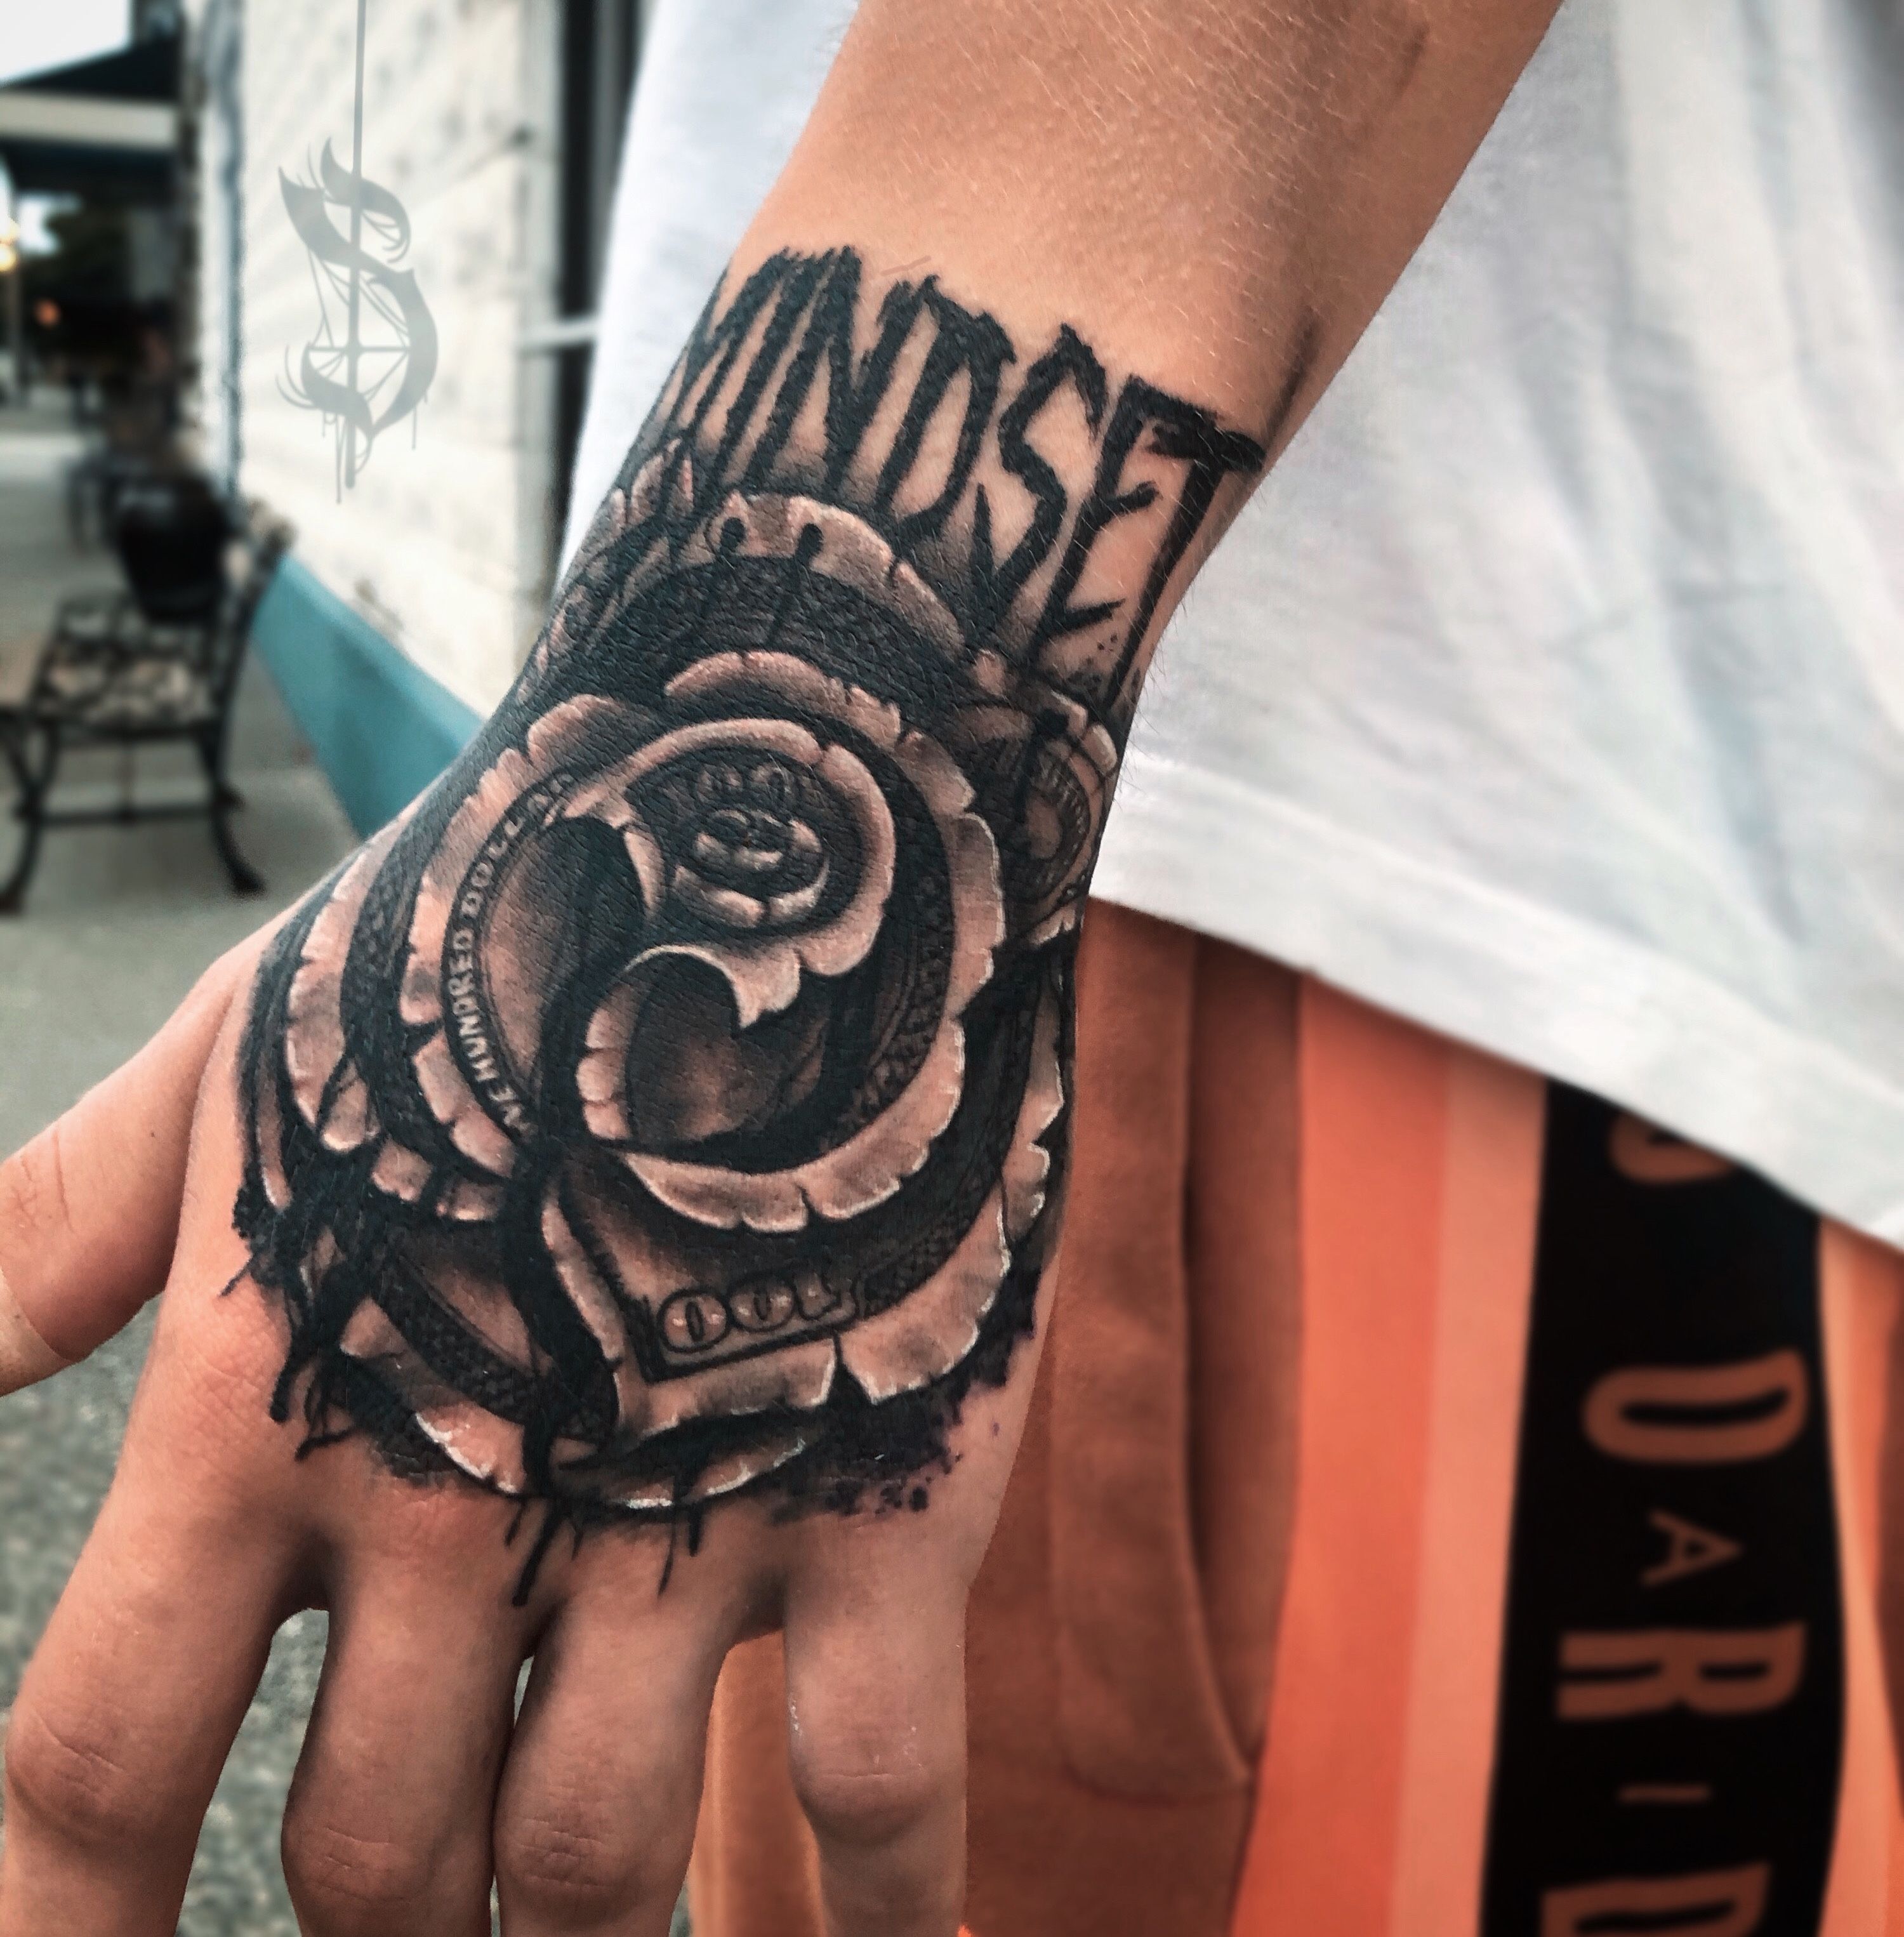 Dollar rose on hand  Donatas Lasys tattoo artist  Facebook